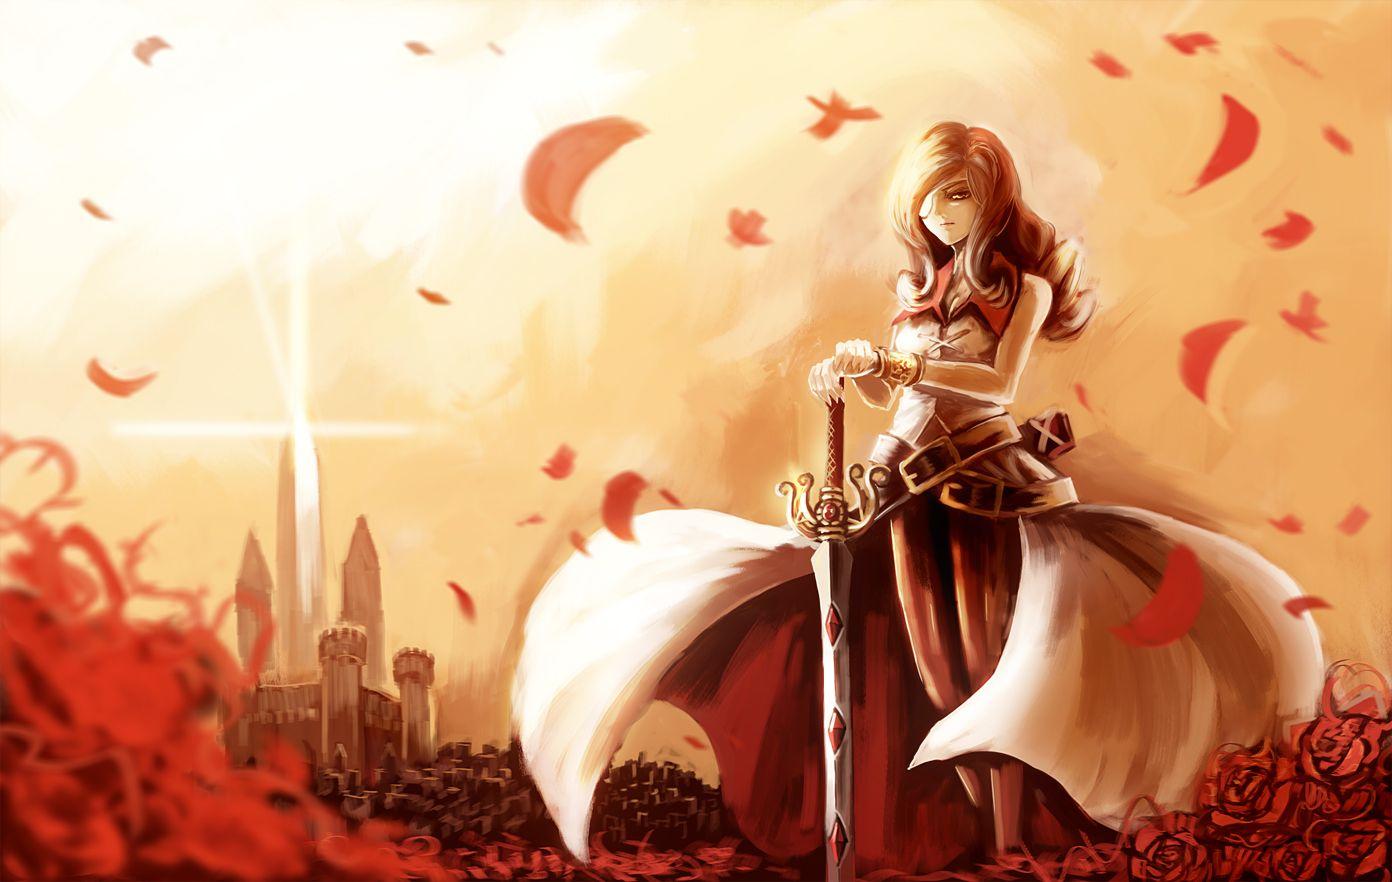 Final Fantasy Ix Wallpapers Top Free Final Fantasy Ix Backgrounds Wallpaperaccess